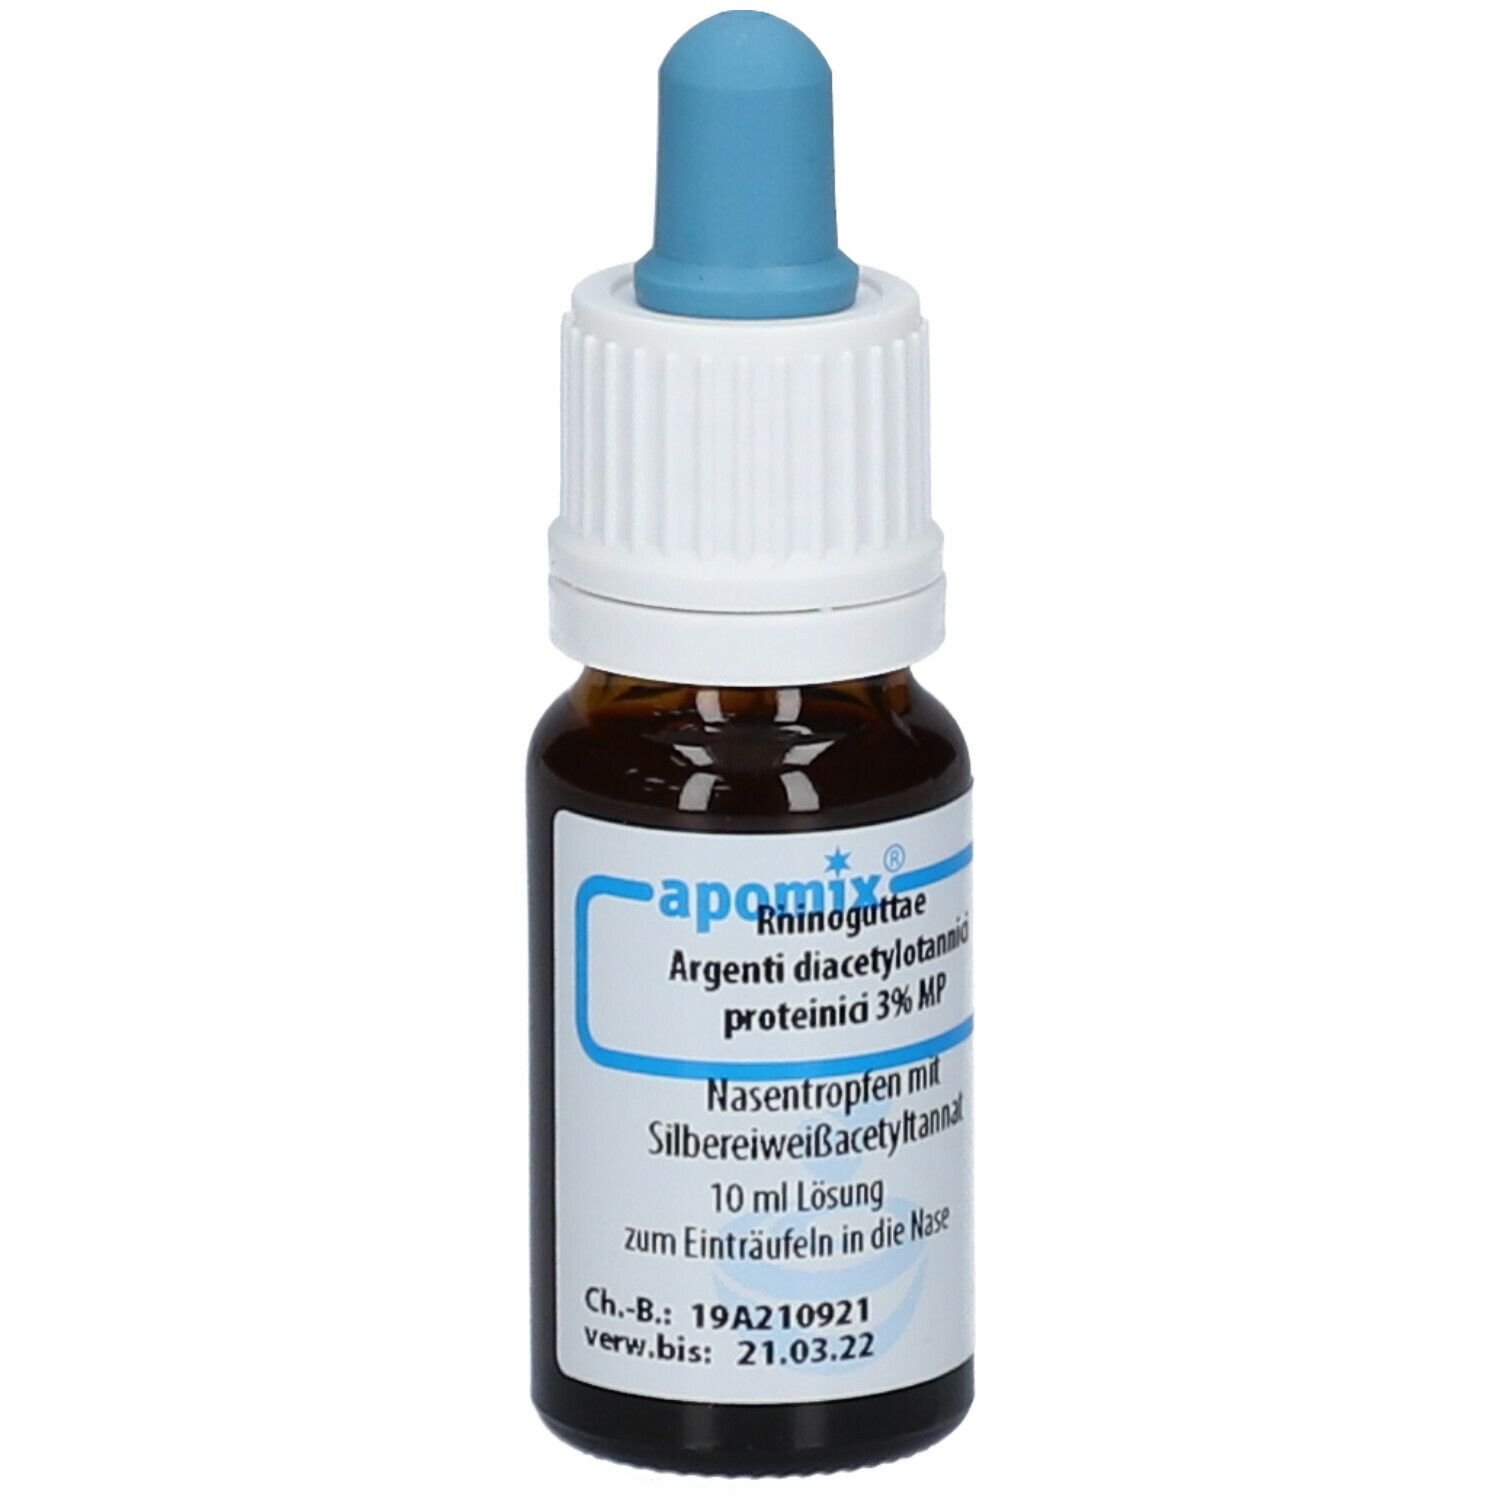 apomix® Rhinoguttae Argenti diacetylotannici proteinici 3 % MP